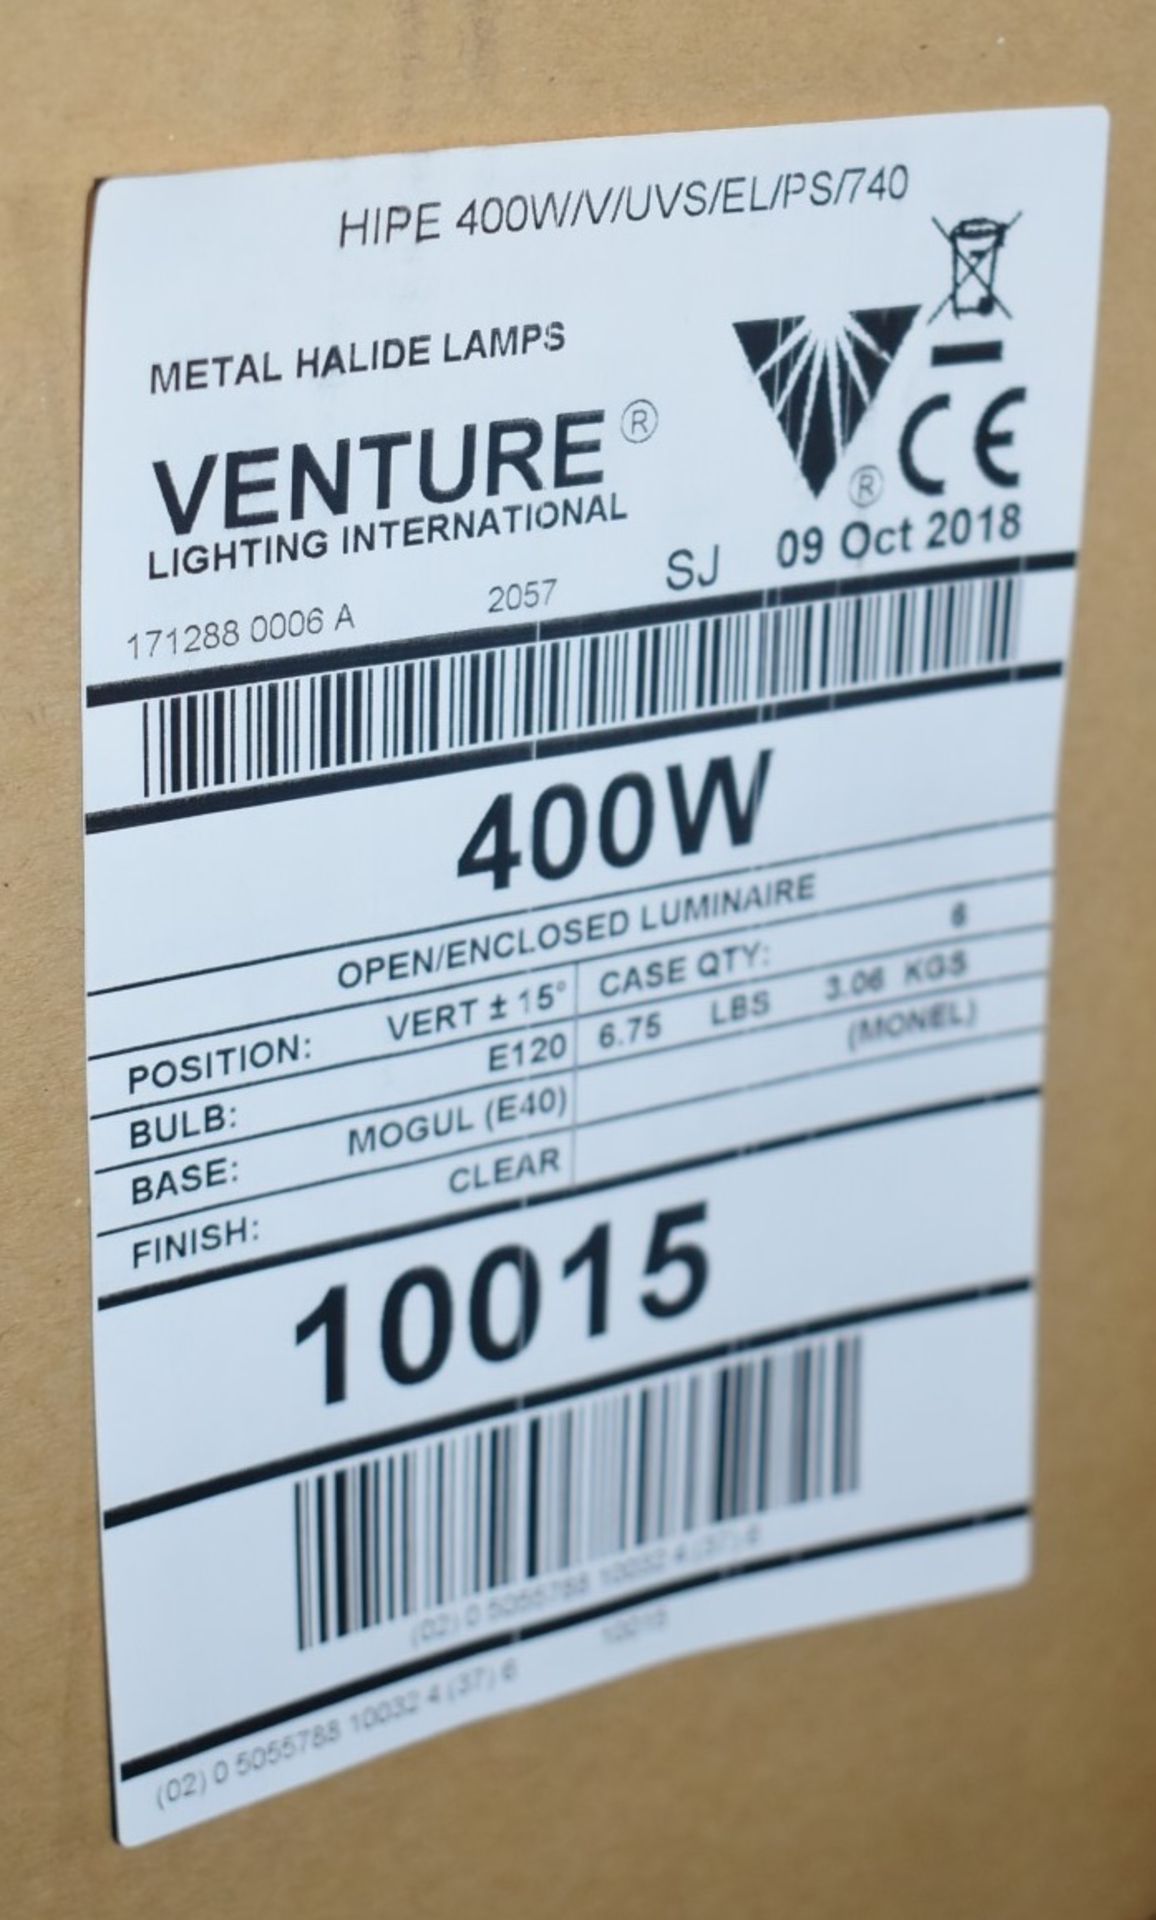 6 x Venture HIPE Elliptical Metal Halide Lamps - Type: 400W/V/UVS/EL/PS/740 - New Stock - RRP £216 - Image 2 of 3